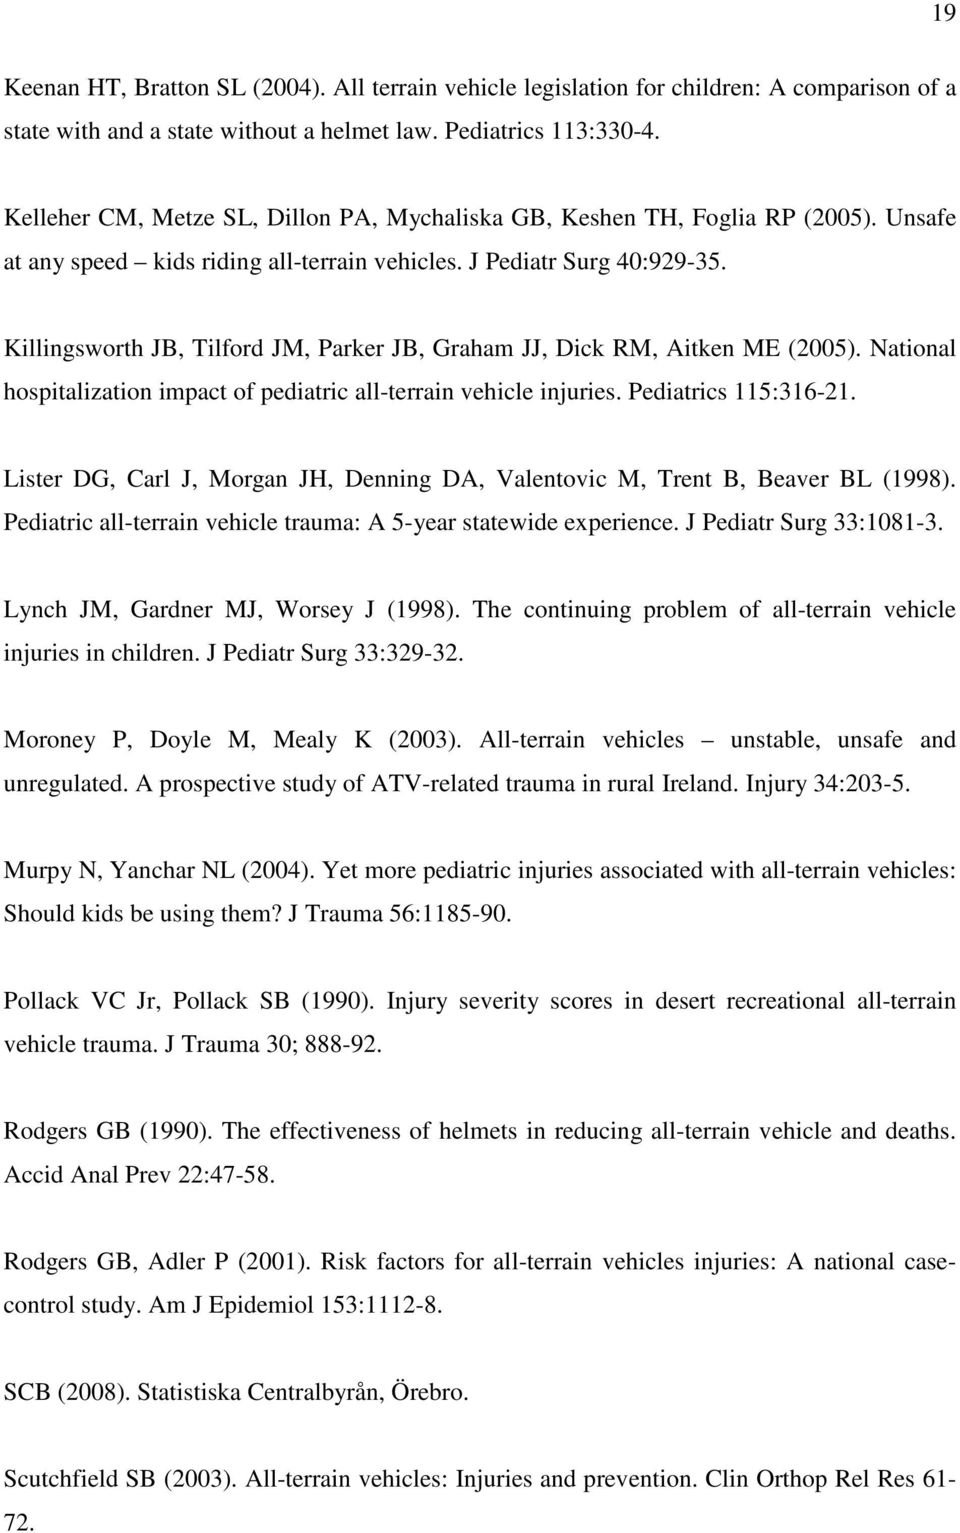 Killingsworth JB, Tilford JM, Parker JB, Graham JJ, Dick RM, Aitken ME (2005). National hospitalization impact of pediatric all-terrain vehicle injuries. Pediatrics 115:316-21.